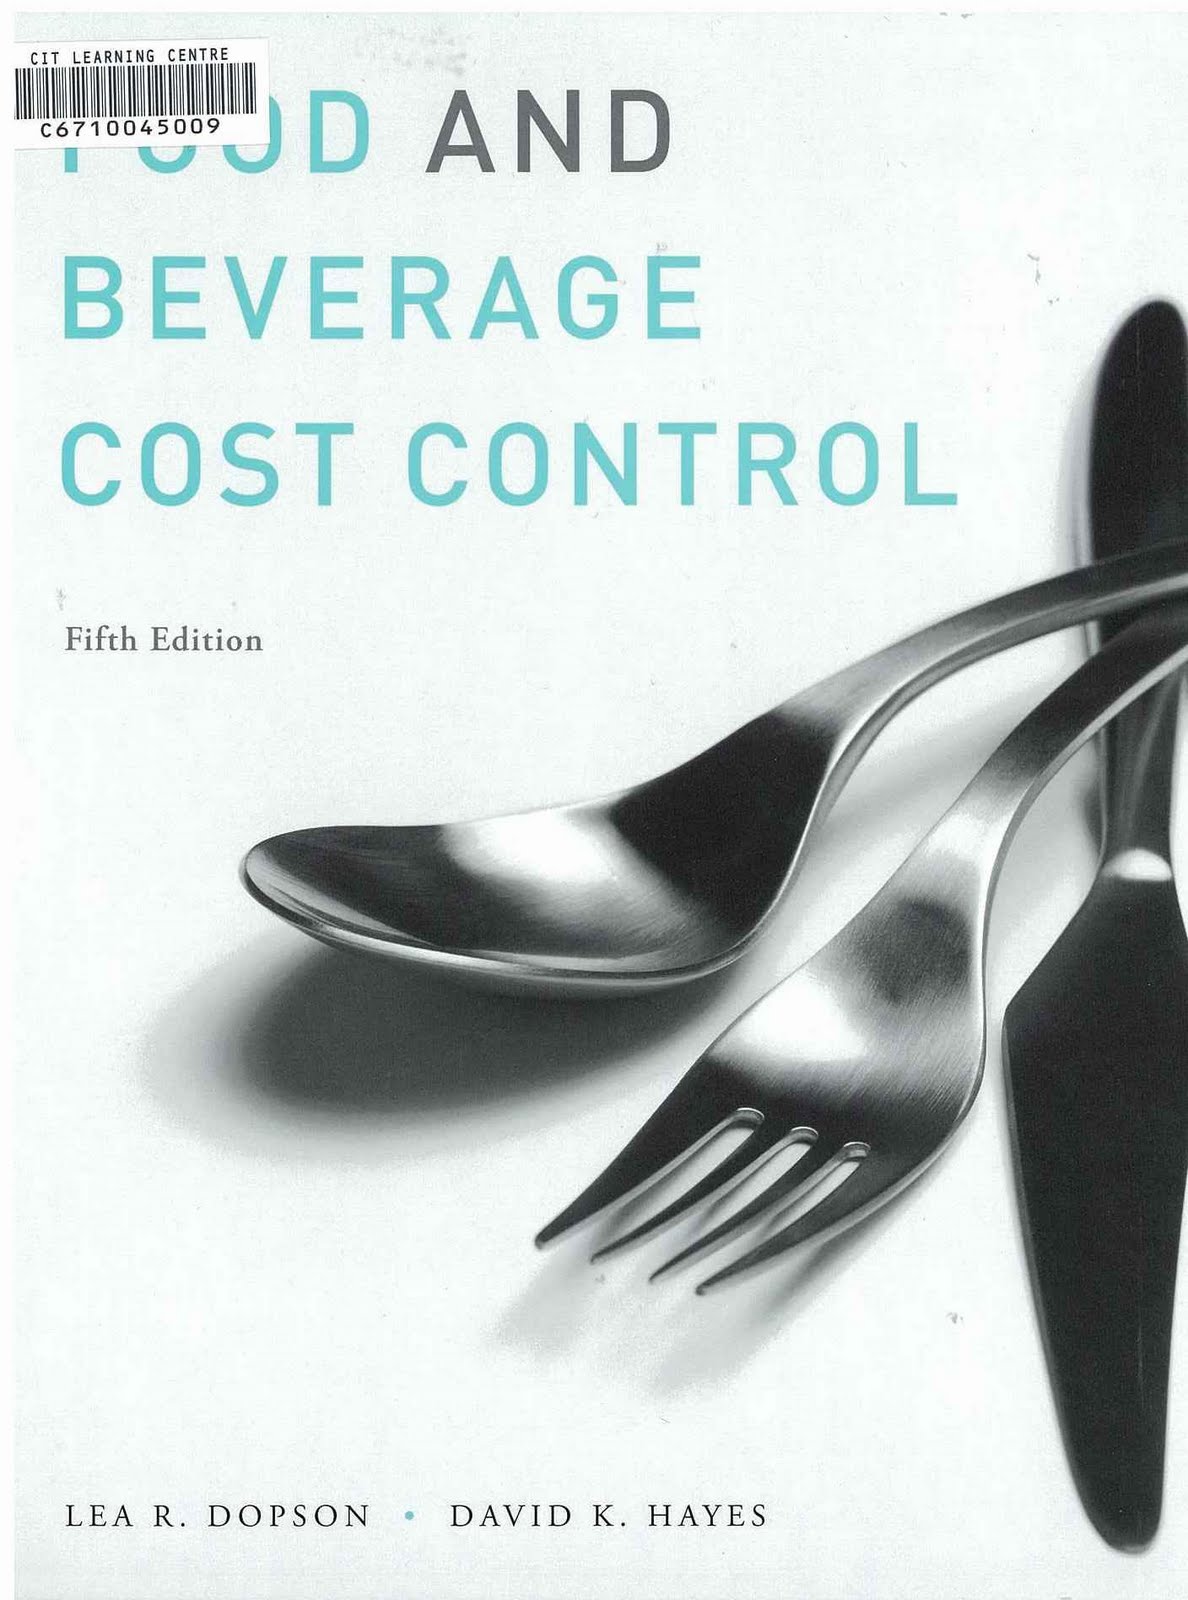 Beverage Cost Control